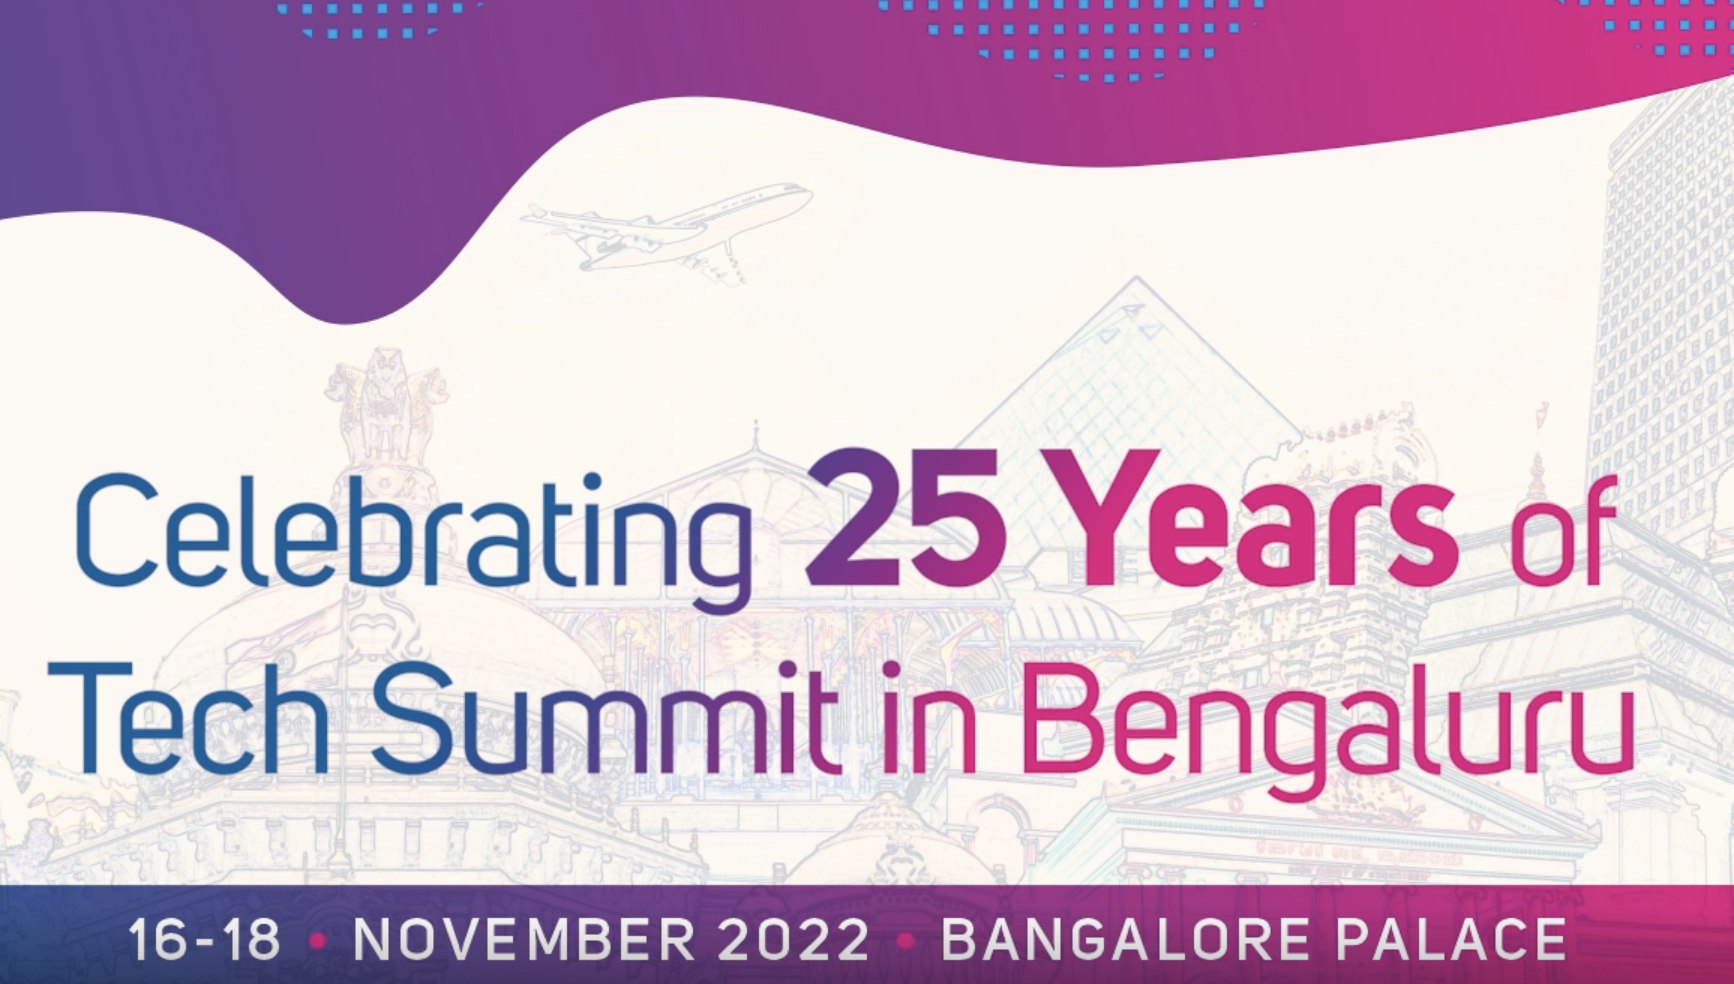 Meet Serpzilla at Bengaluru Tech Summit!